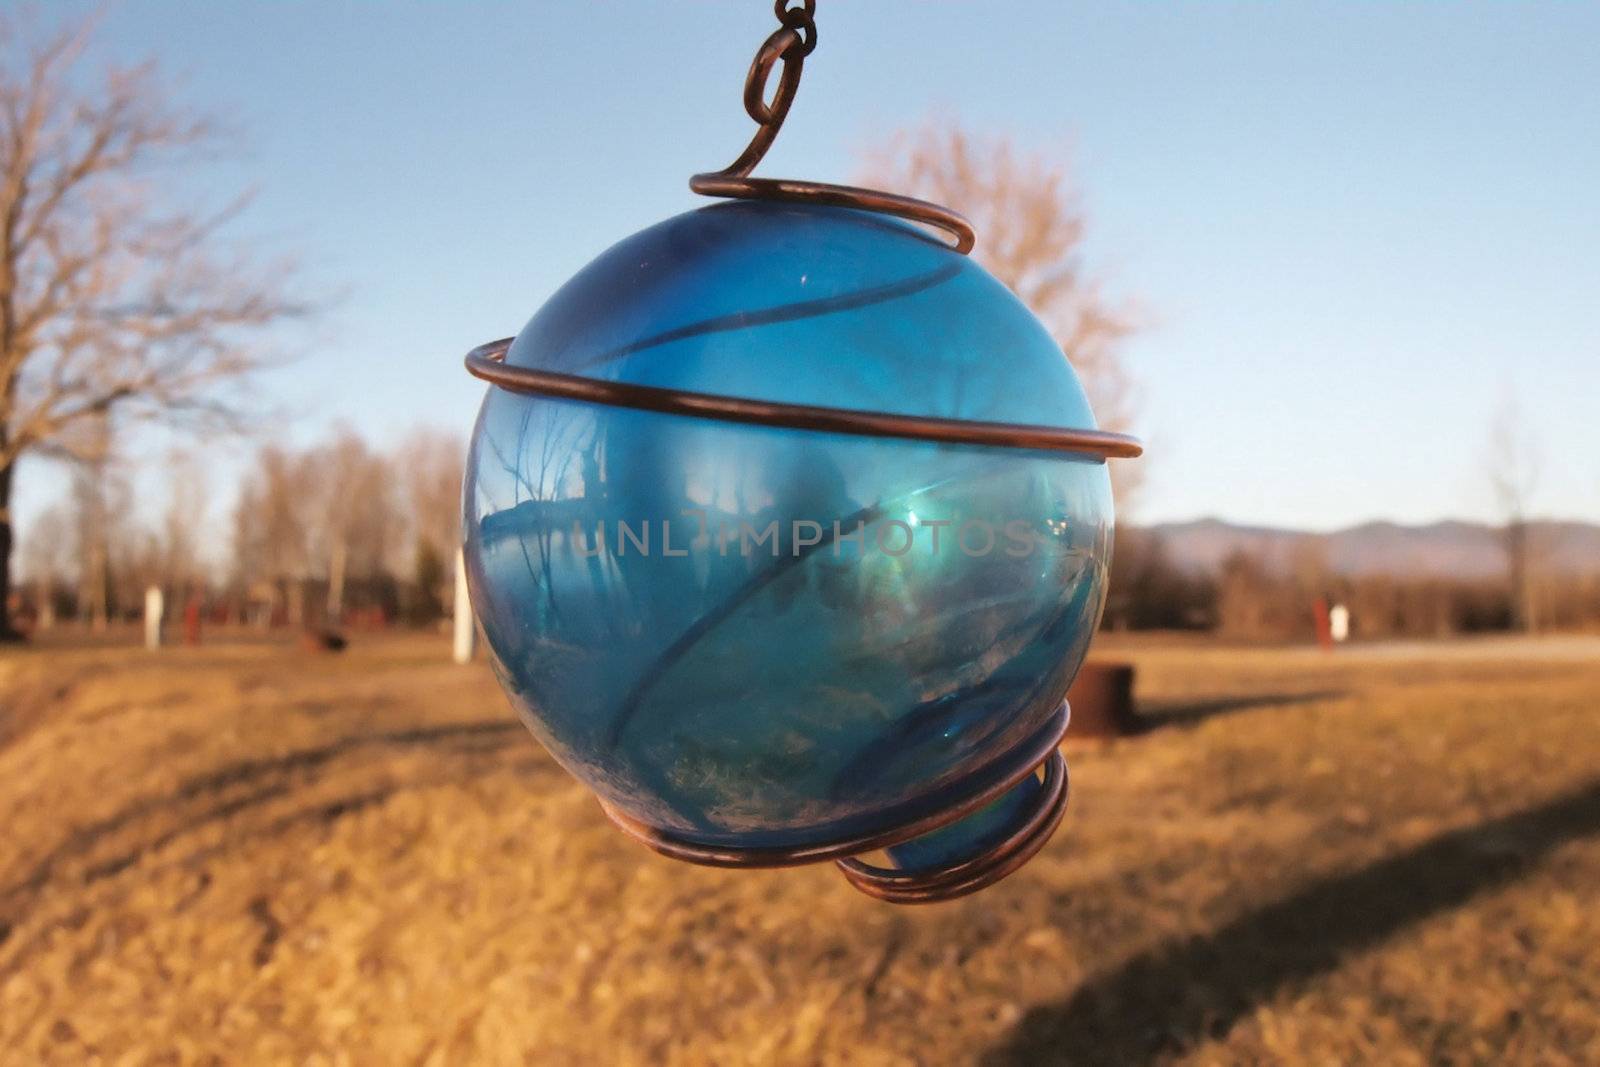 A hanging decorative blue ball